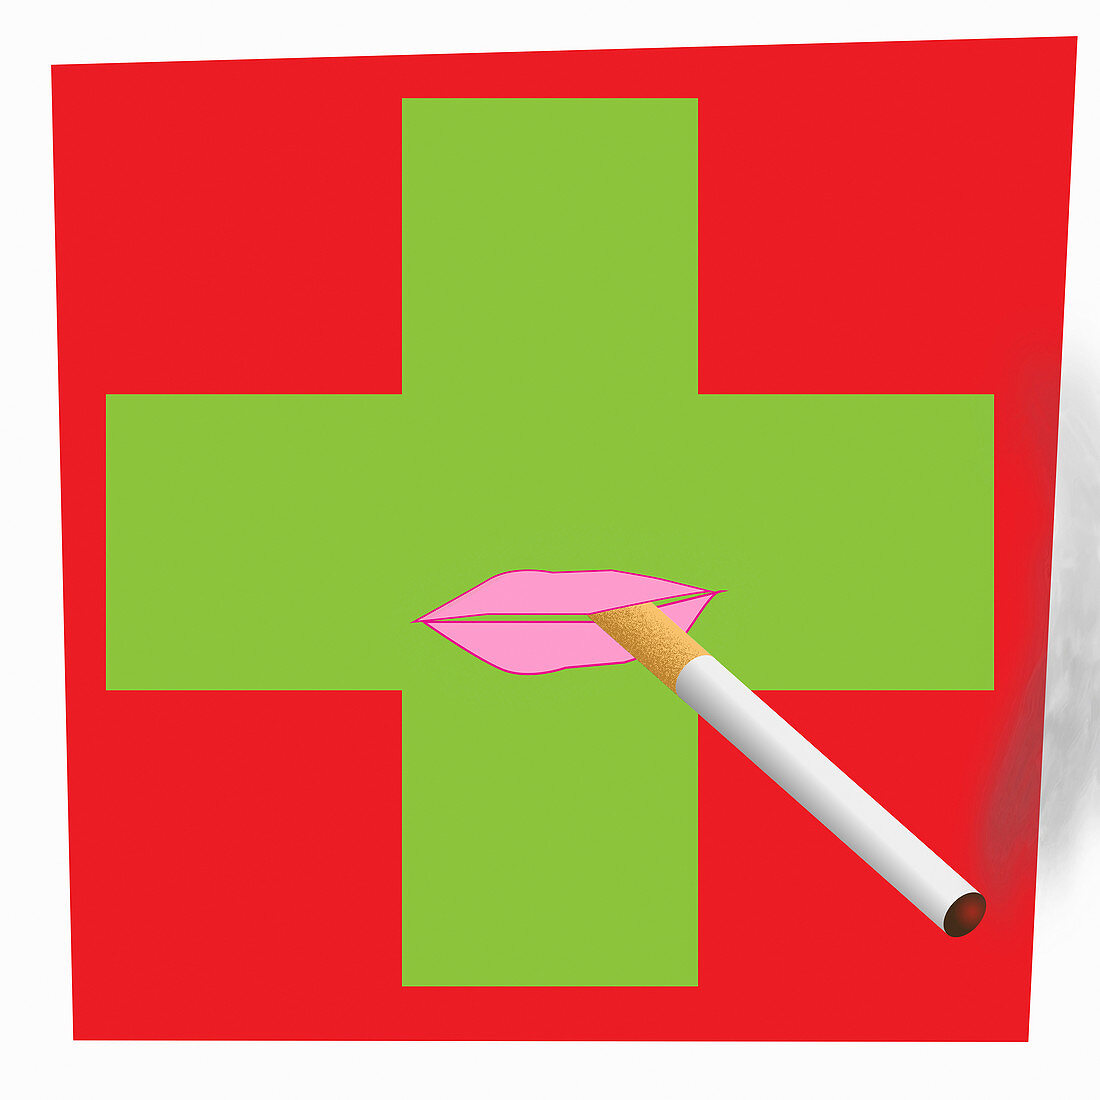 Lips smoking cigarette on pharmacy sign, illustration